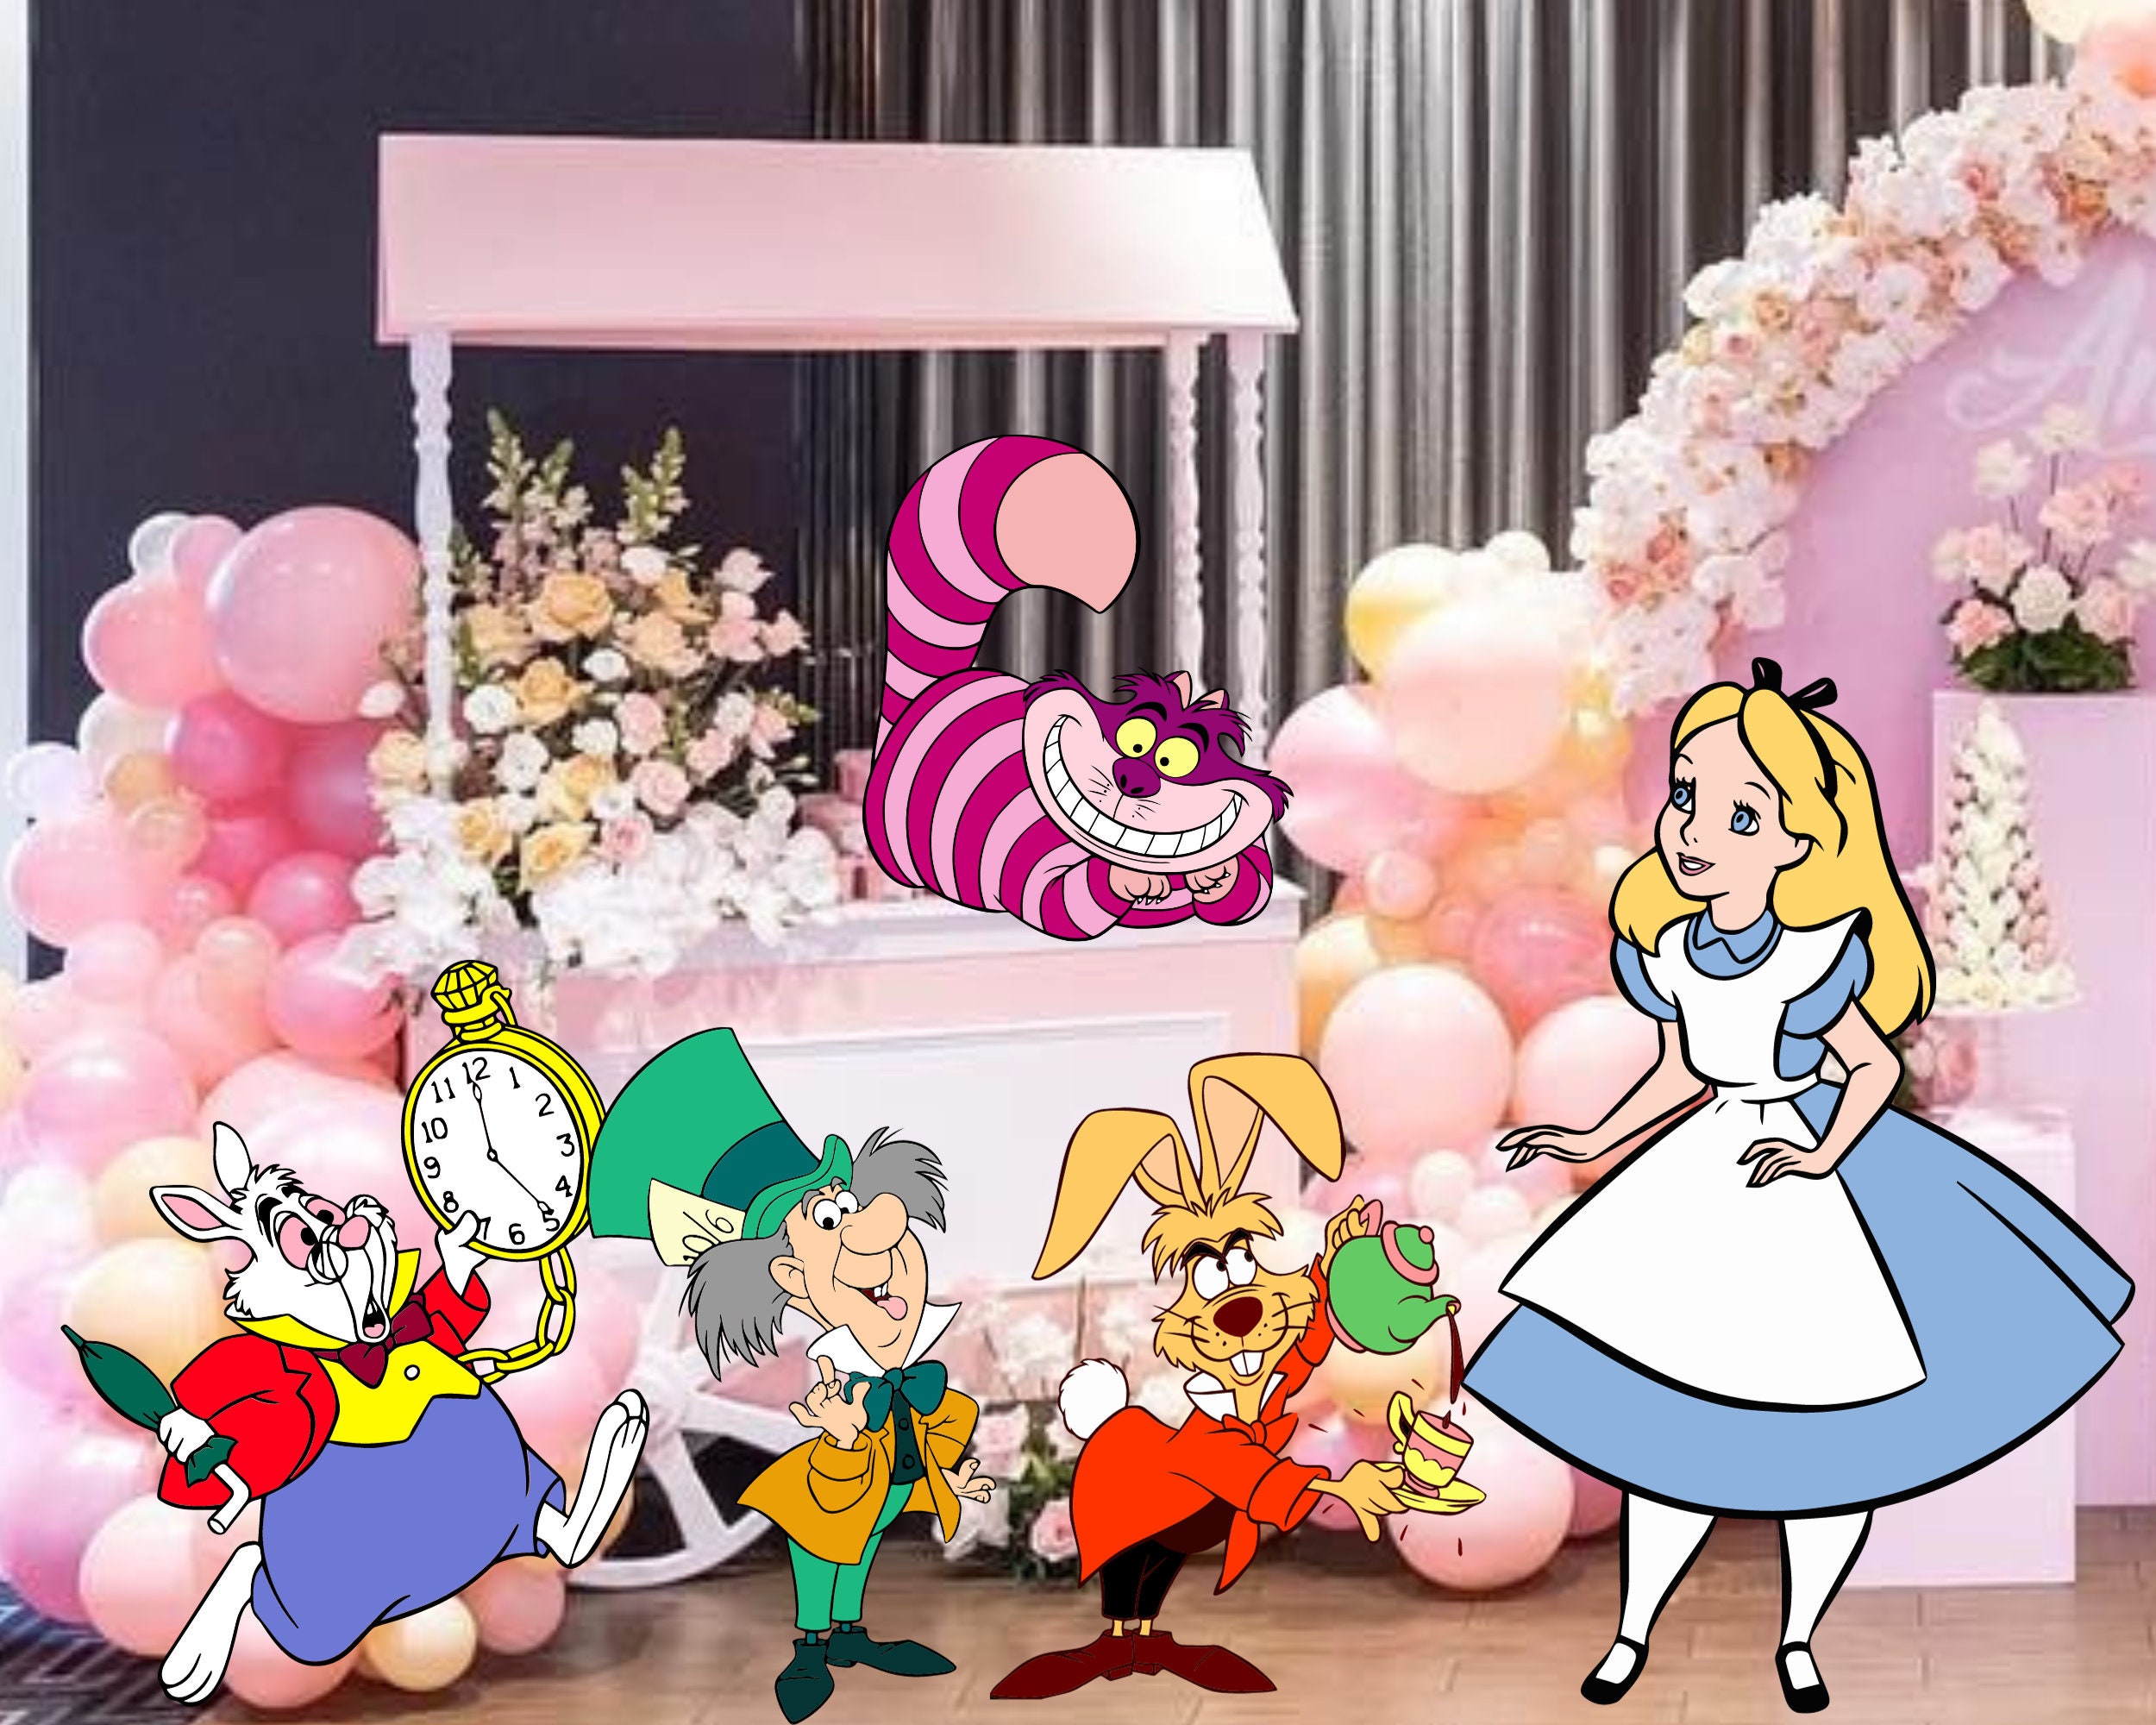 30 Enchanting Alice In Wonderland Party Ideas